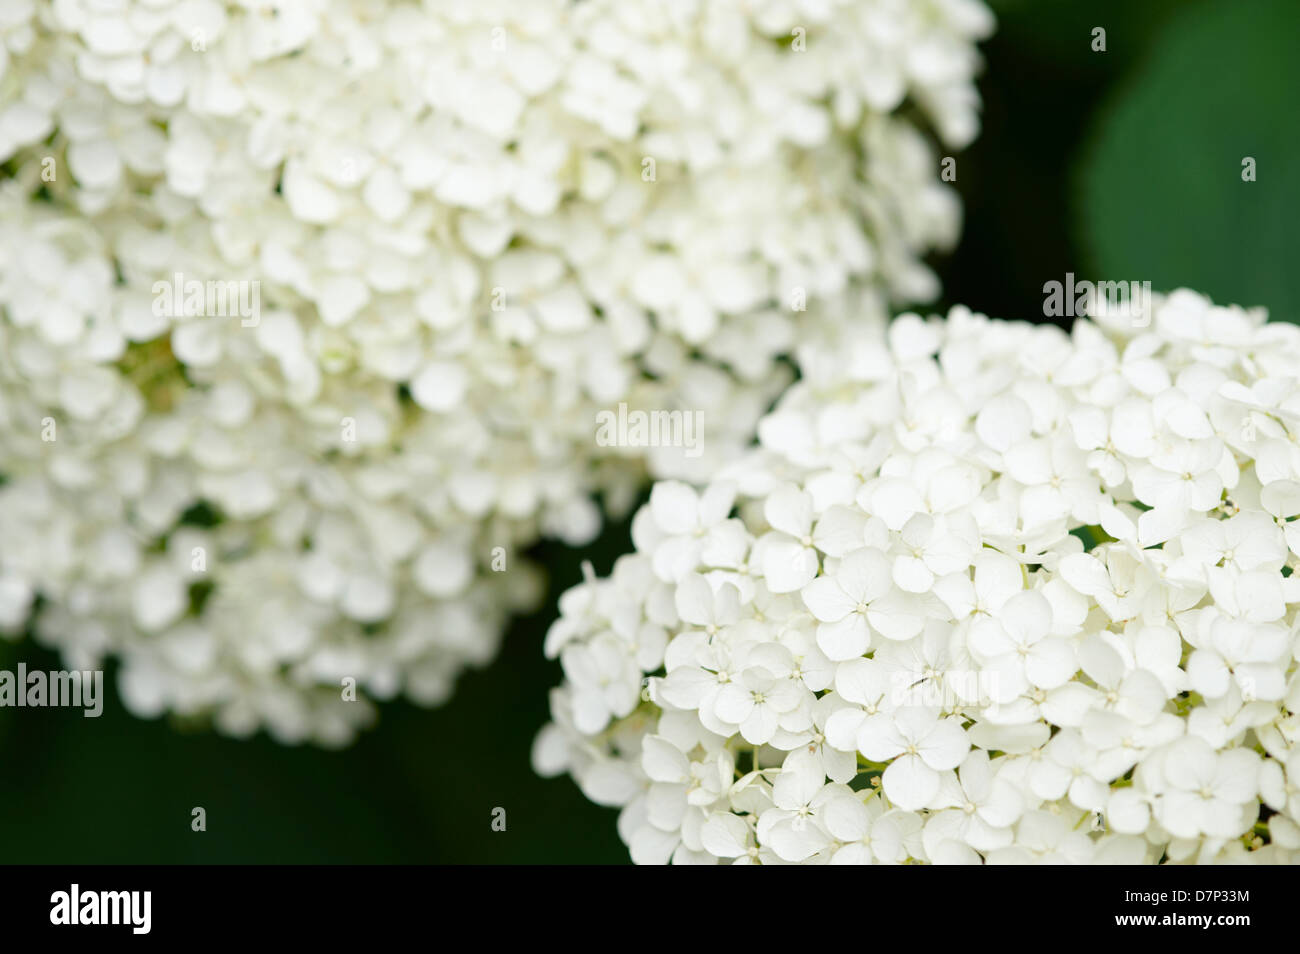 Annabella flowers